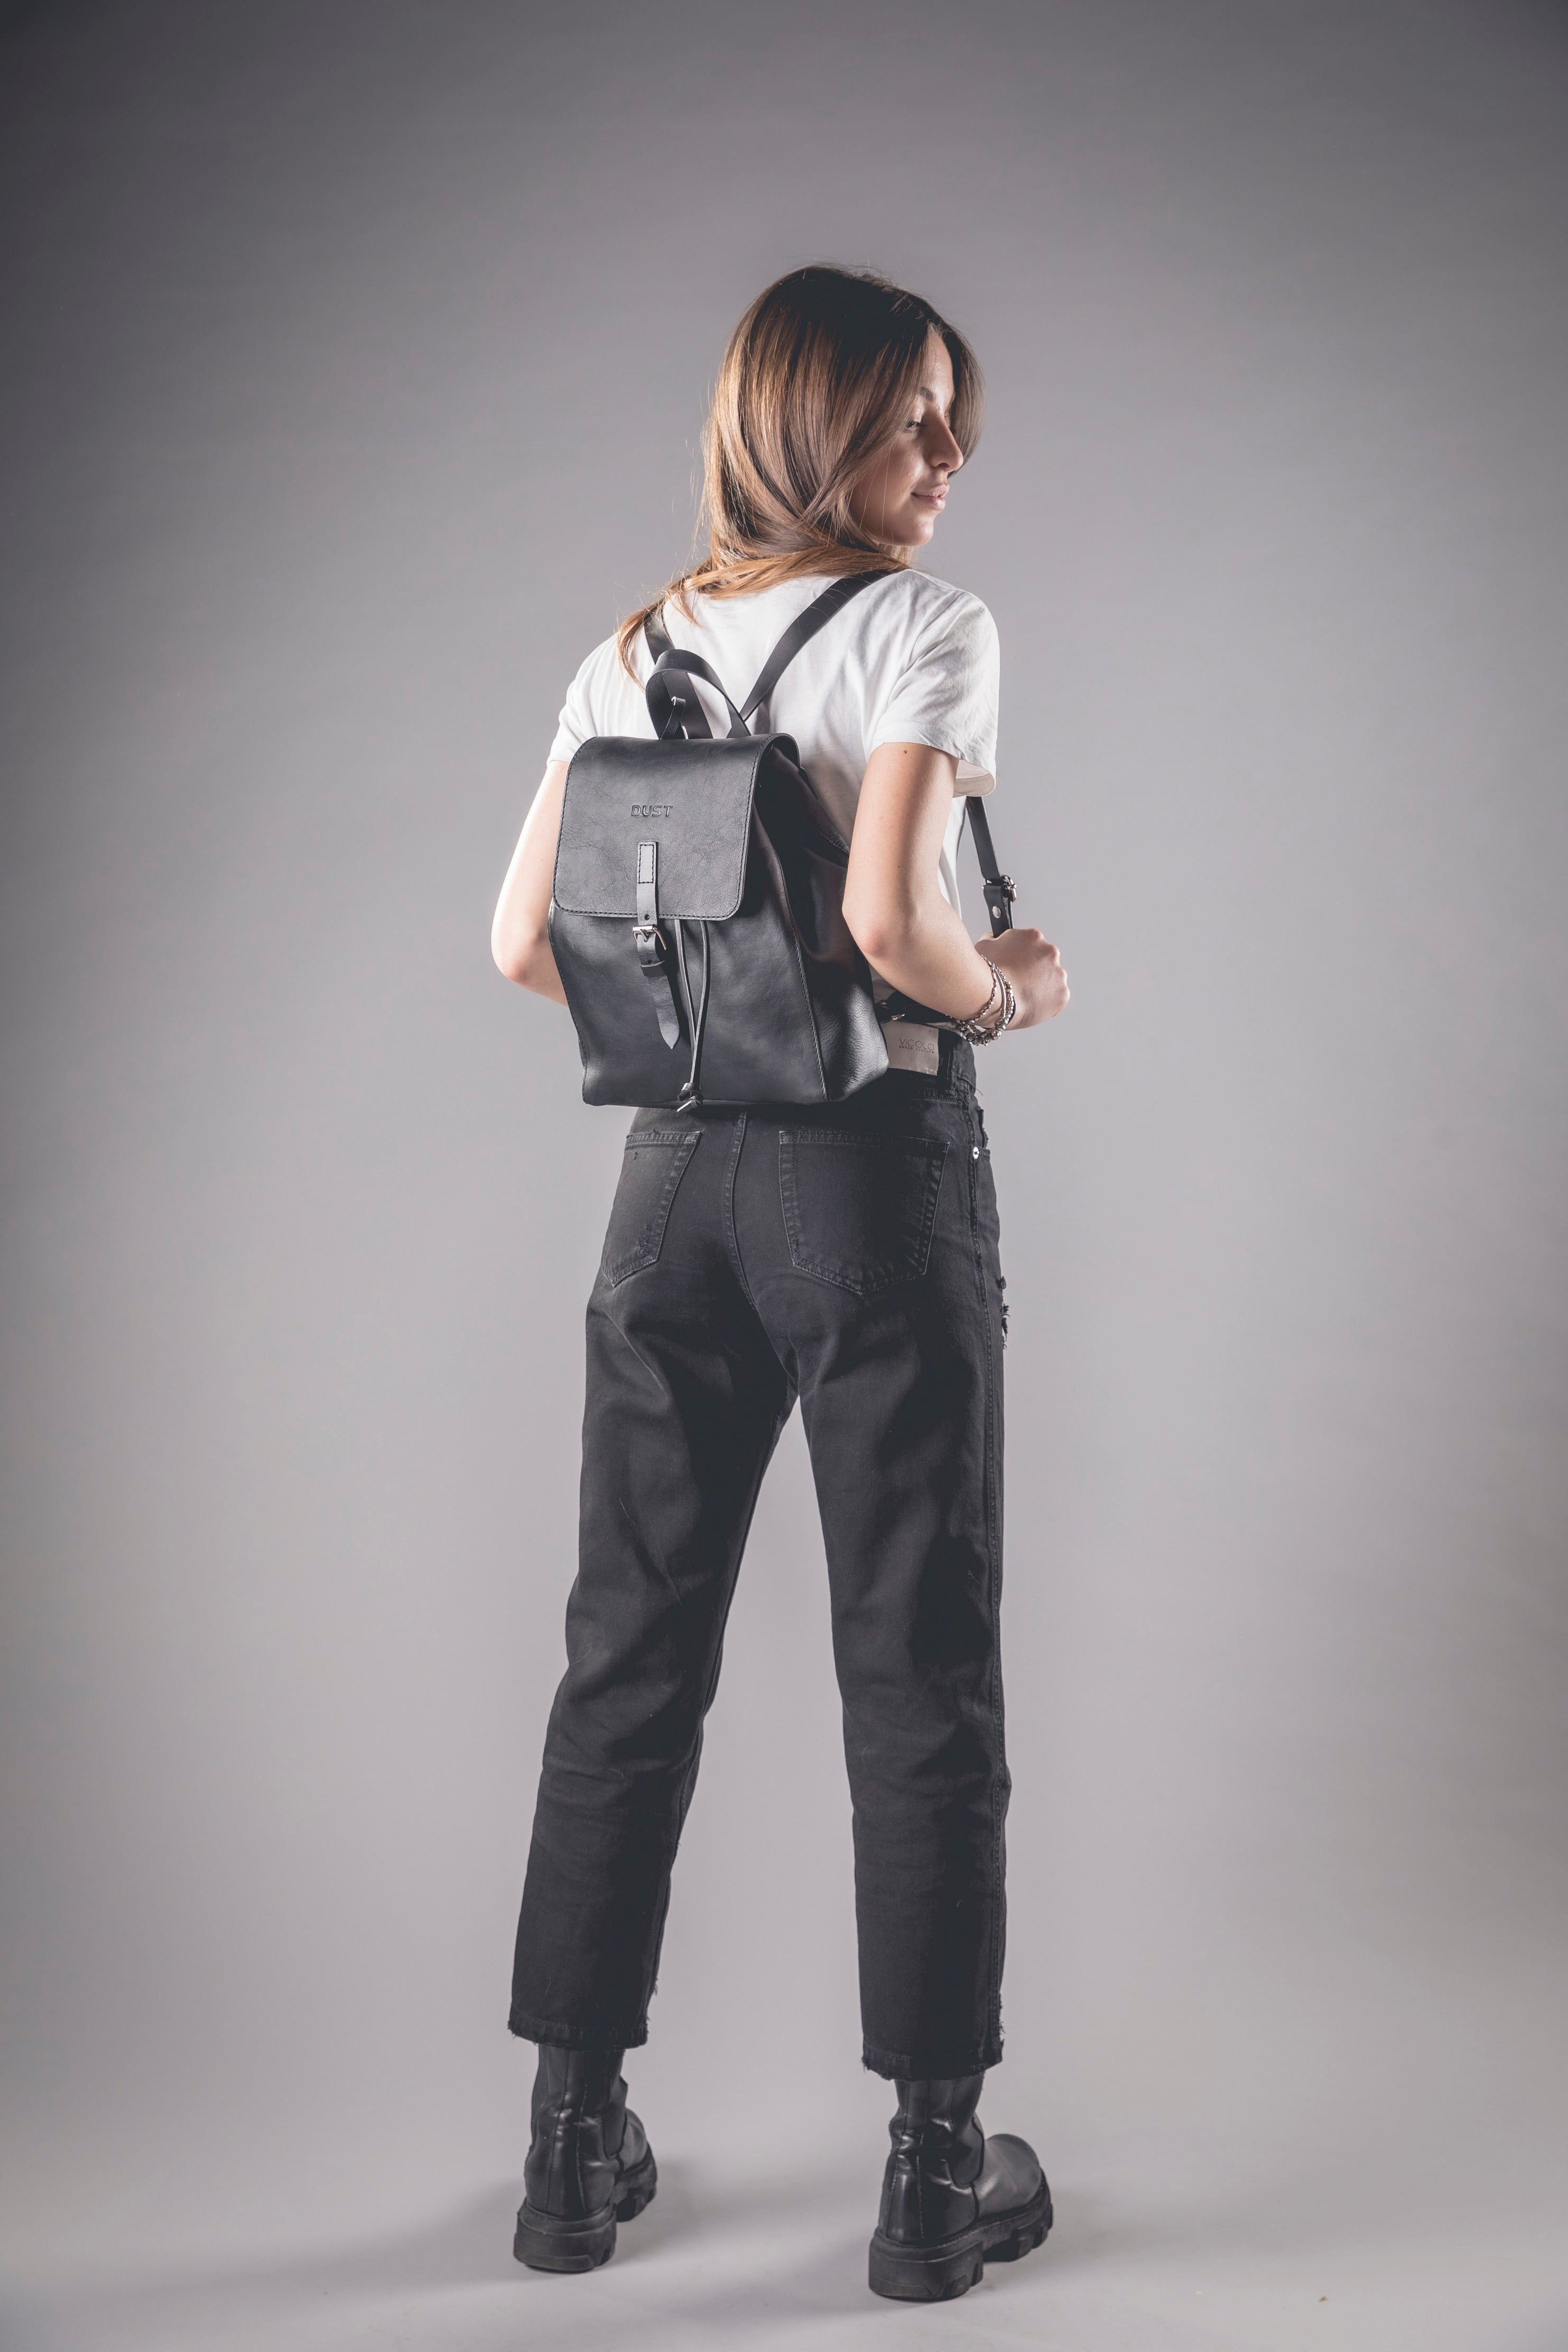 Mod 261 Black - Vegetable-Tanned Leather Backpack